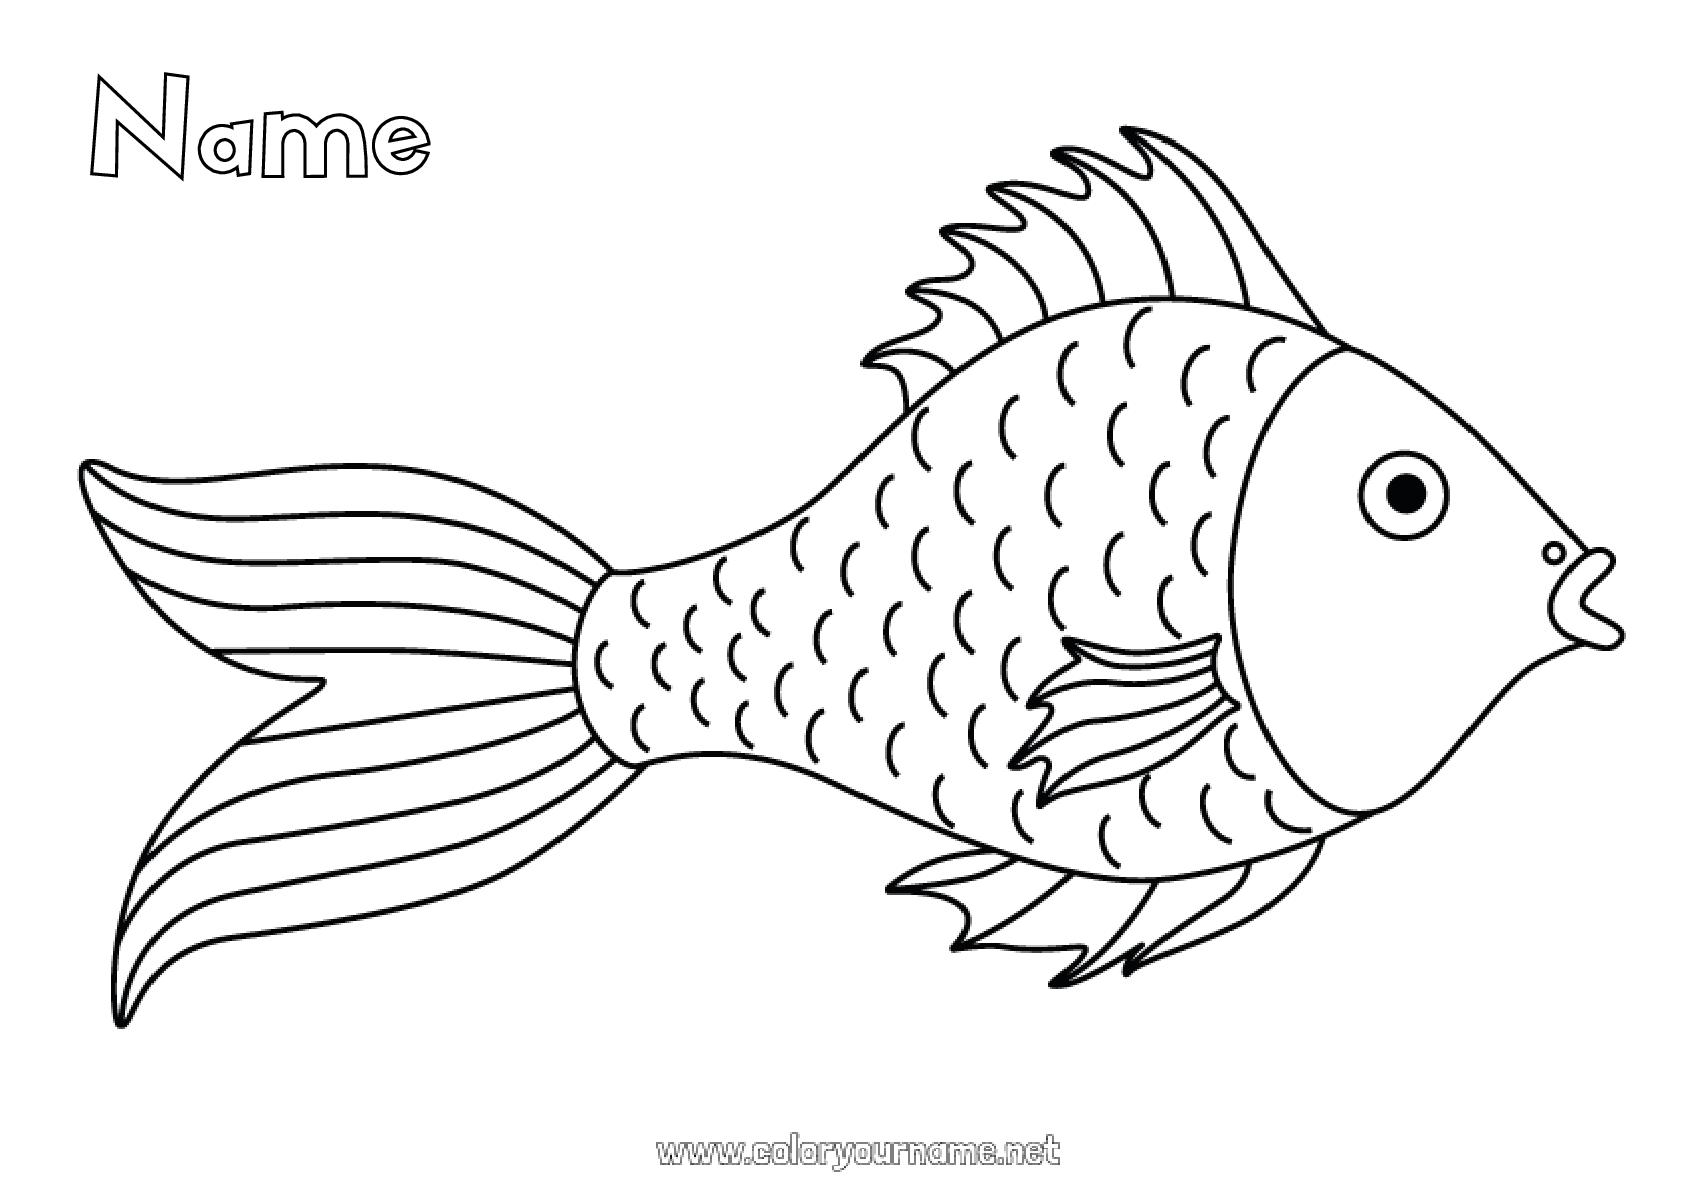 Coloring page No.1273 - Animal Fish April Fools' Day